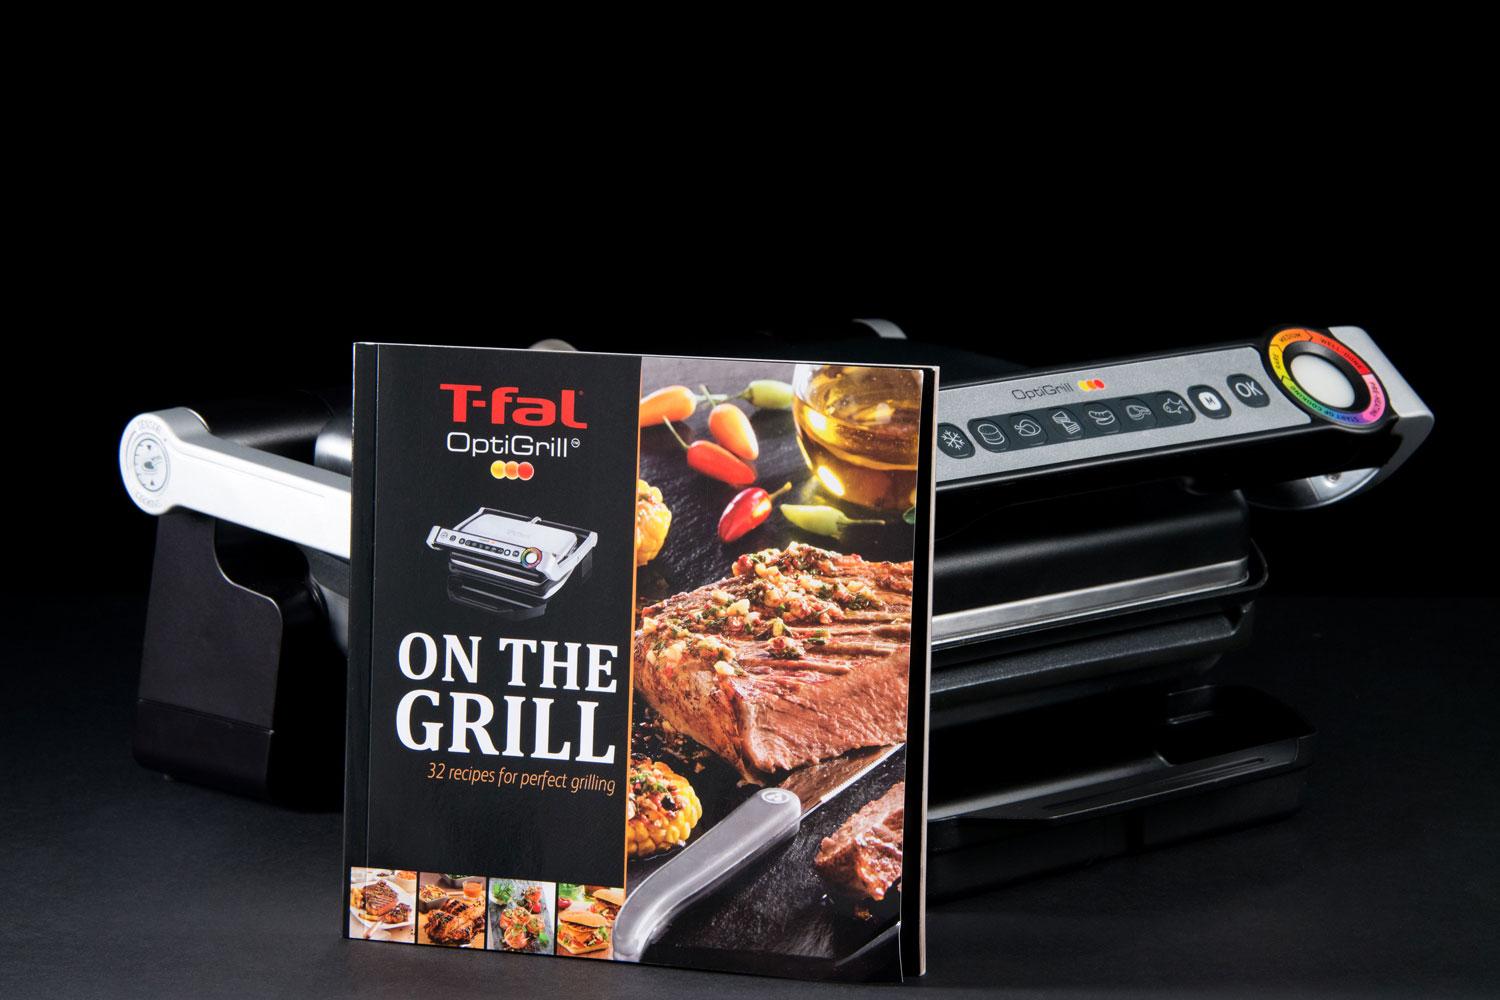 https://www.digitaltrends.com/wp-content/uploads/2013/11/T-fal-Optigrill-with-T-fal-cookbook.jpg